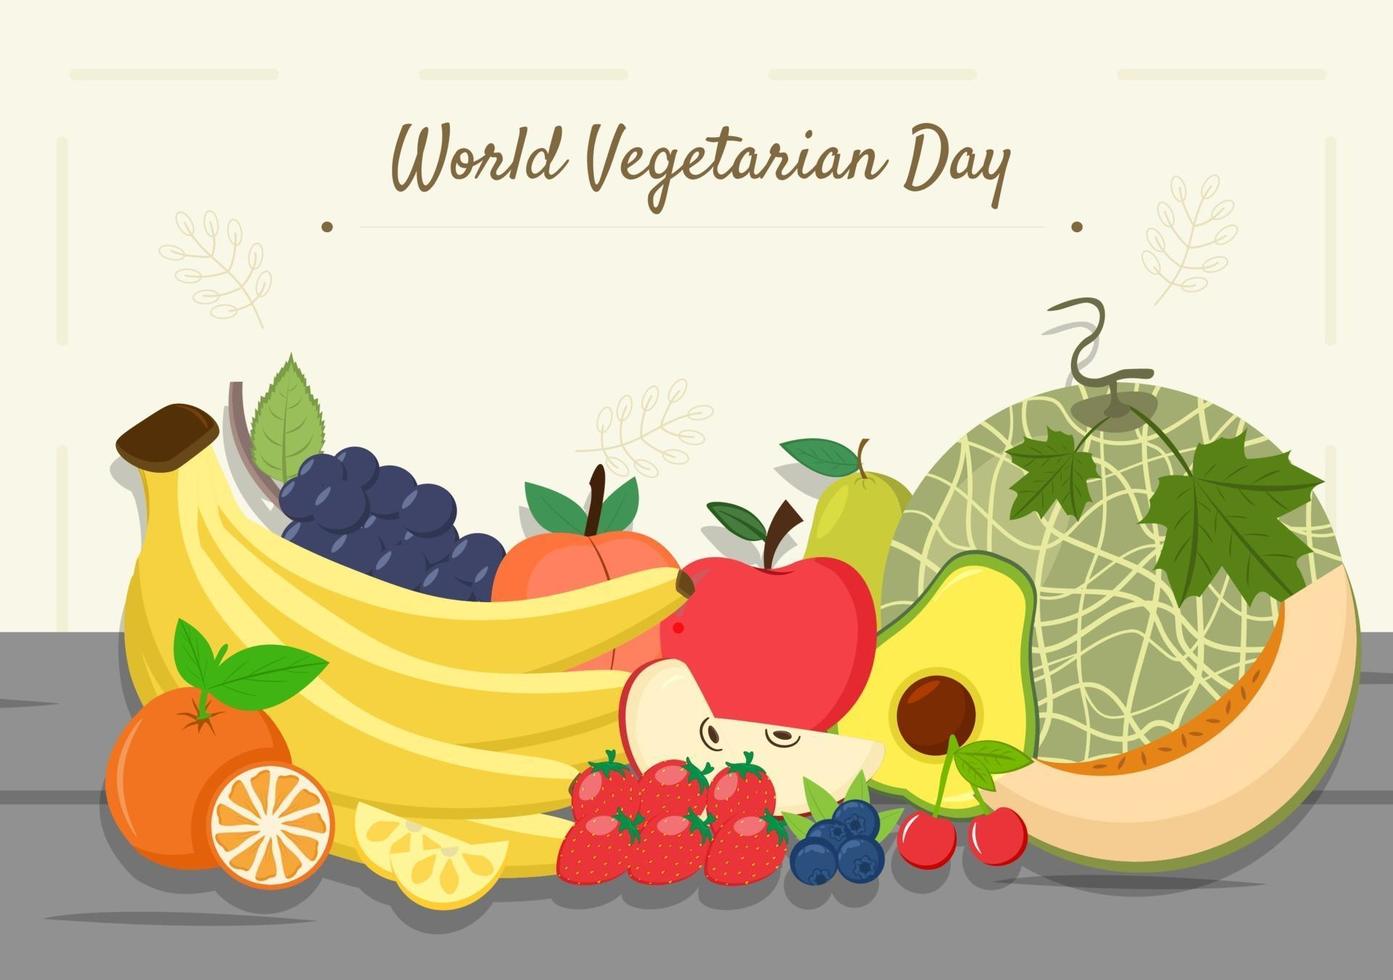 World Vegetarian Day and Vegetables or Fruits Vector Illustration